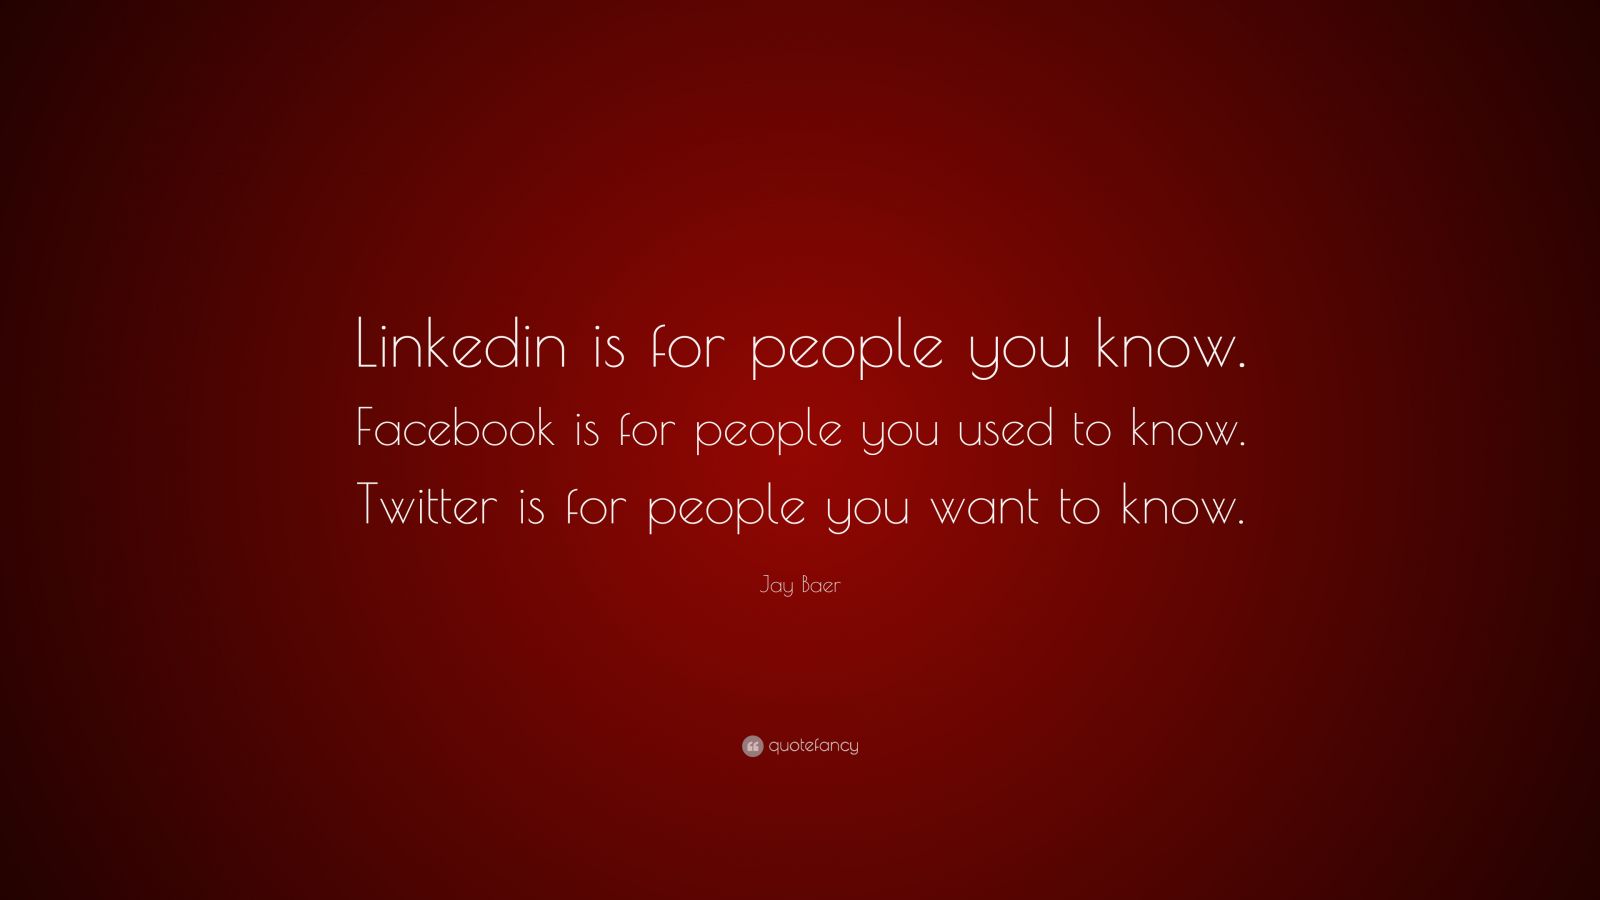 Motivation Quote LinkedIn Header  Free social media template  Piktochart